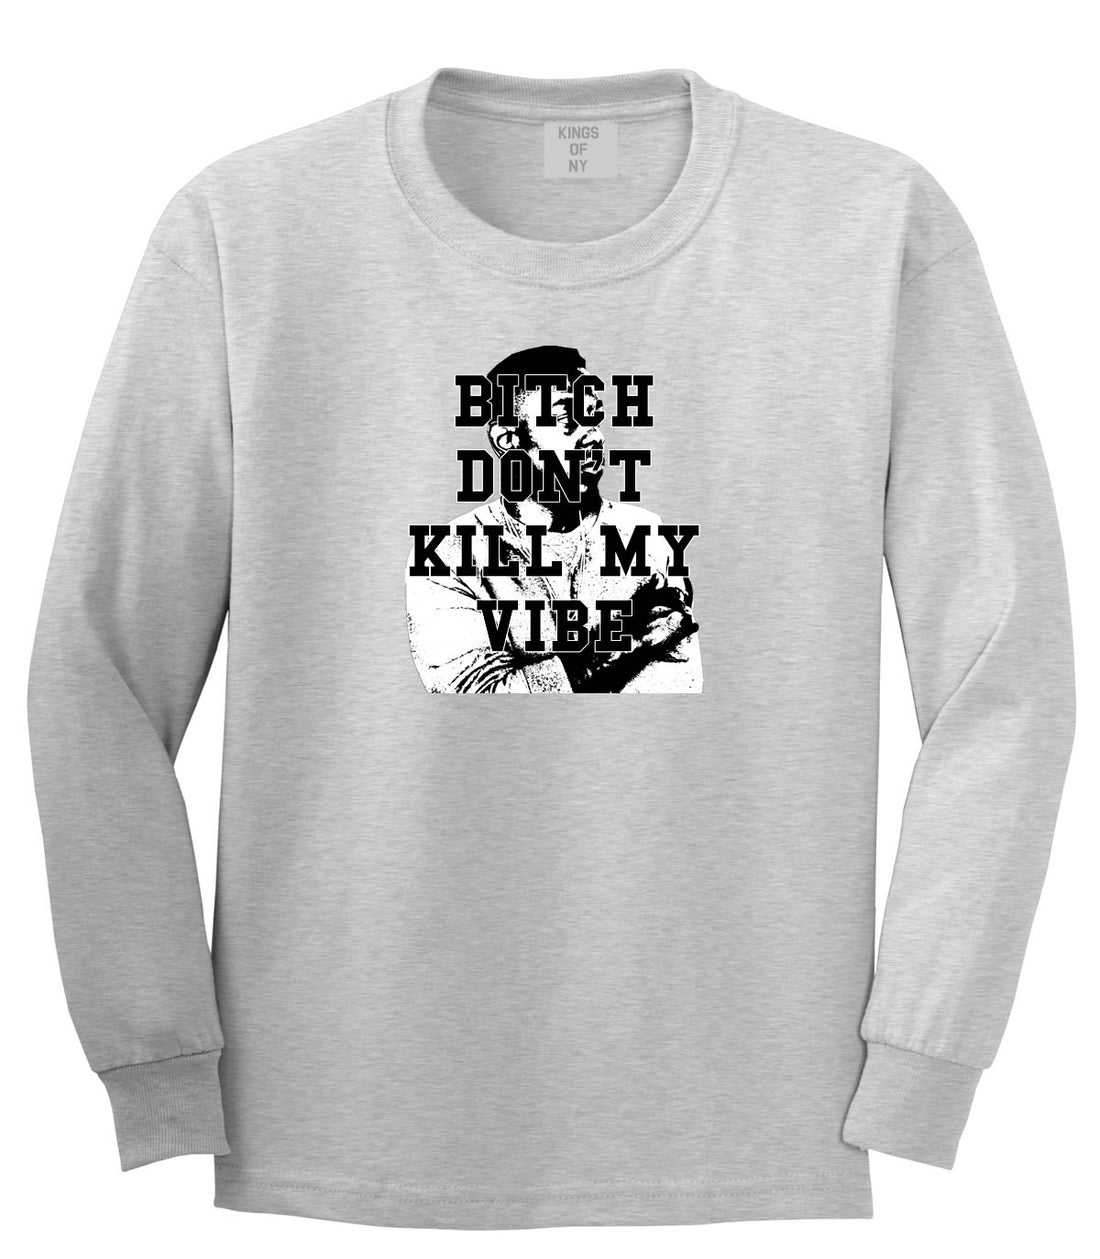 Bitch Dont Kill My Vibe Kendrick Long Sleeve Boys Kids T-Shirt In Grey by Kings Of NY